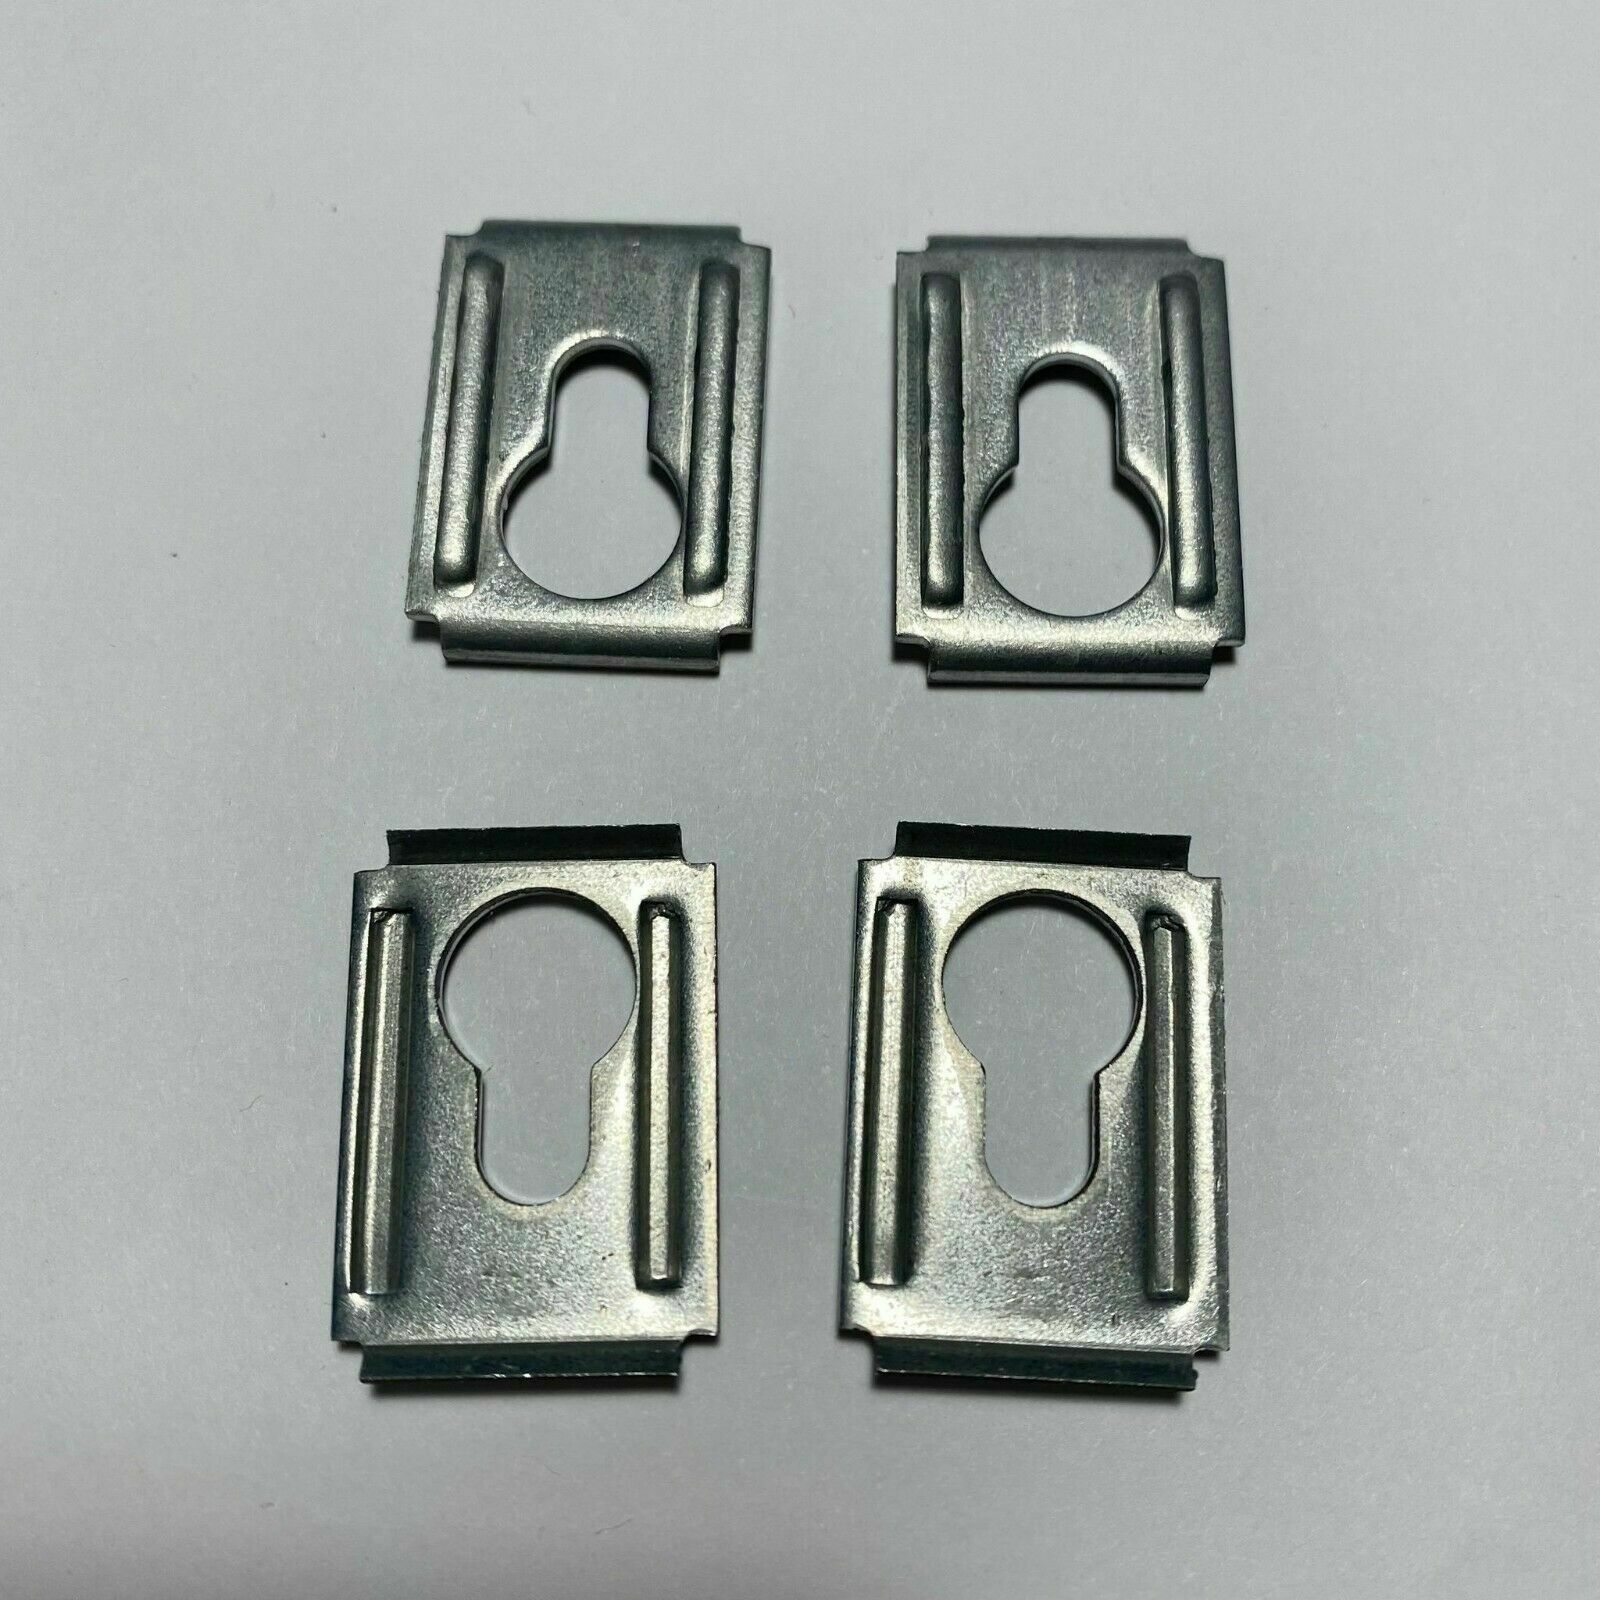 IKEA Keyhole Brackets Part # 103693 (4 pack) Furniture Hardware Parts Fitting